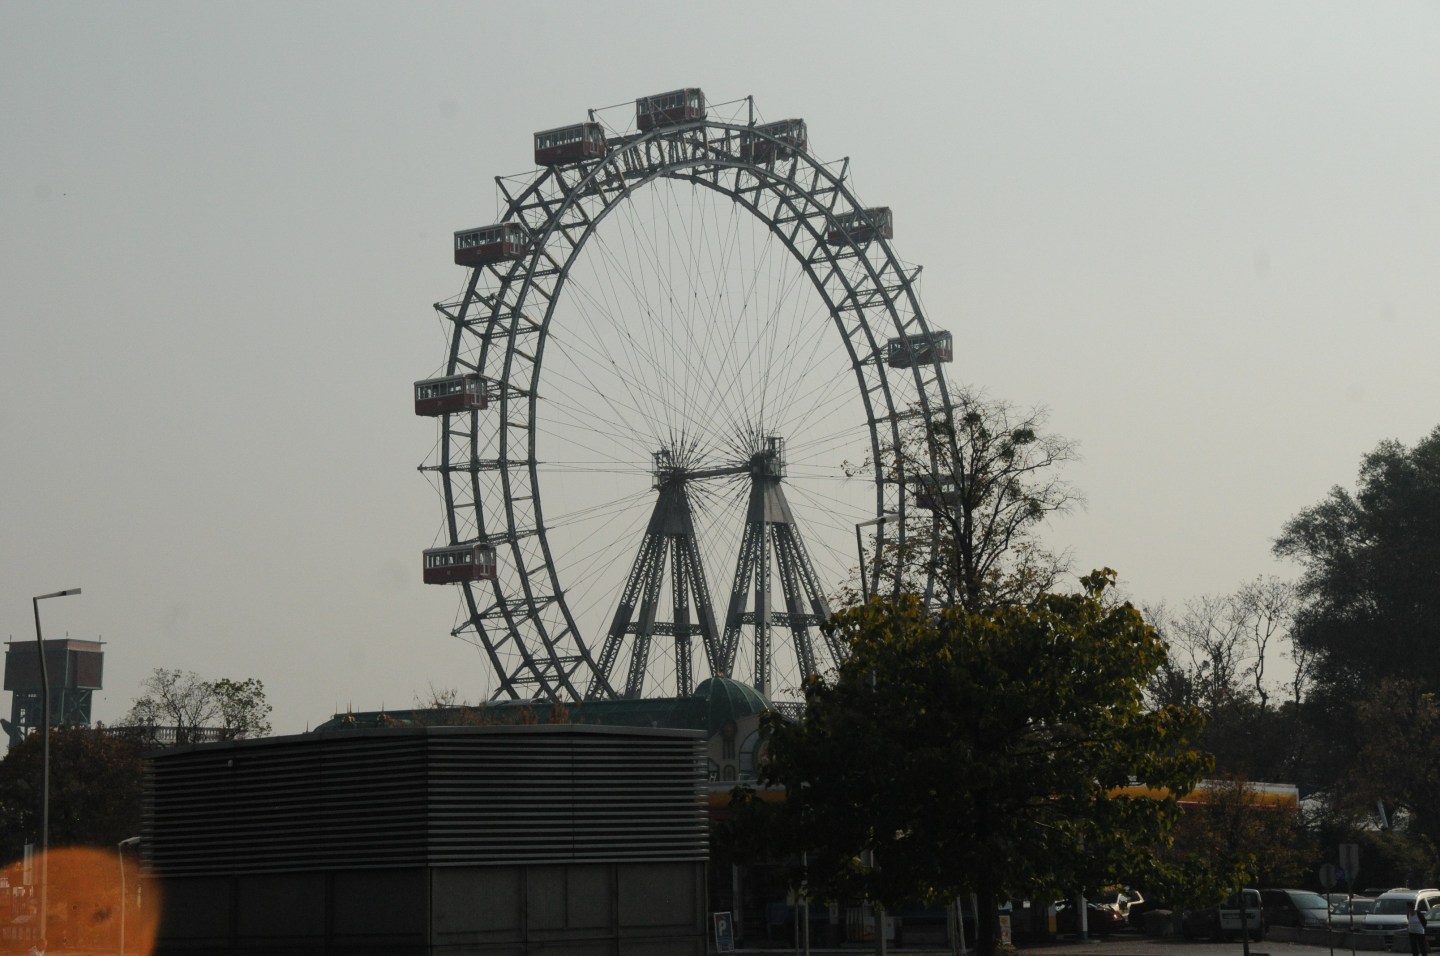 Wiener Riesenrad Ferris Wheel